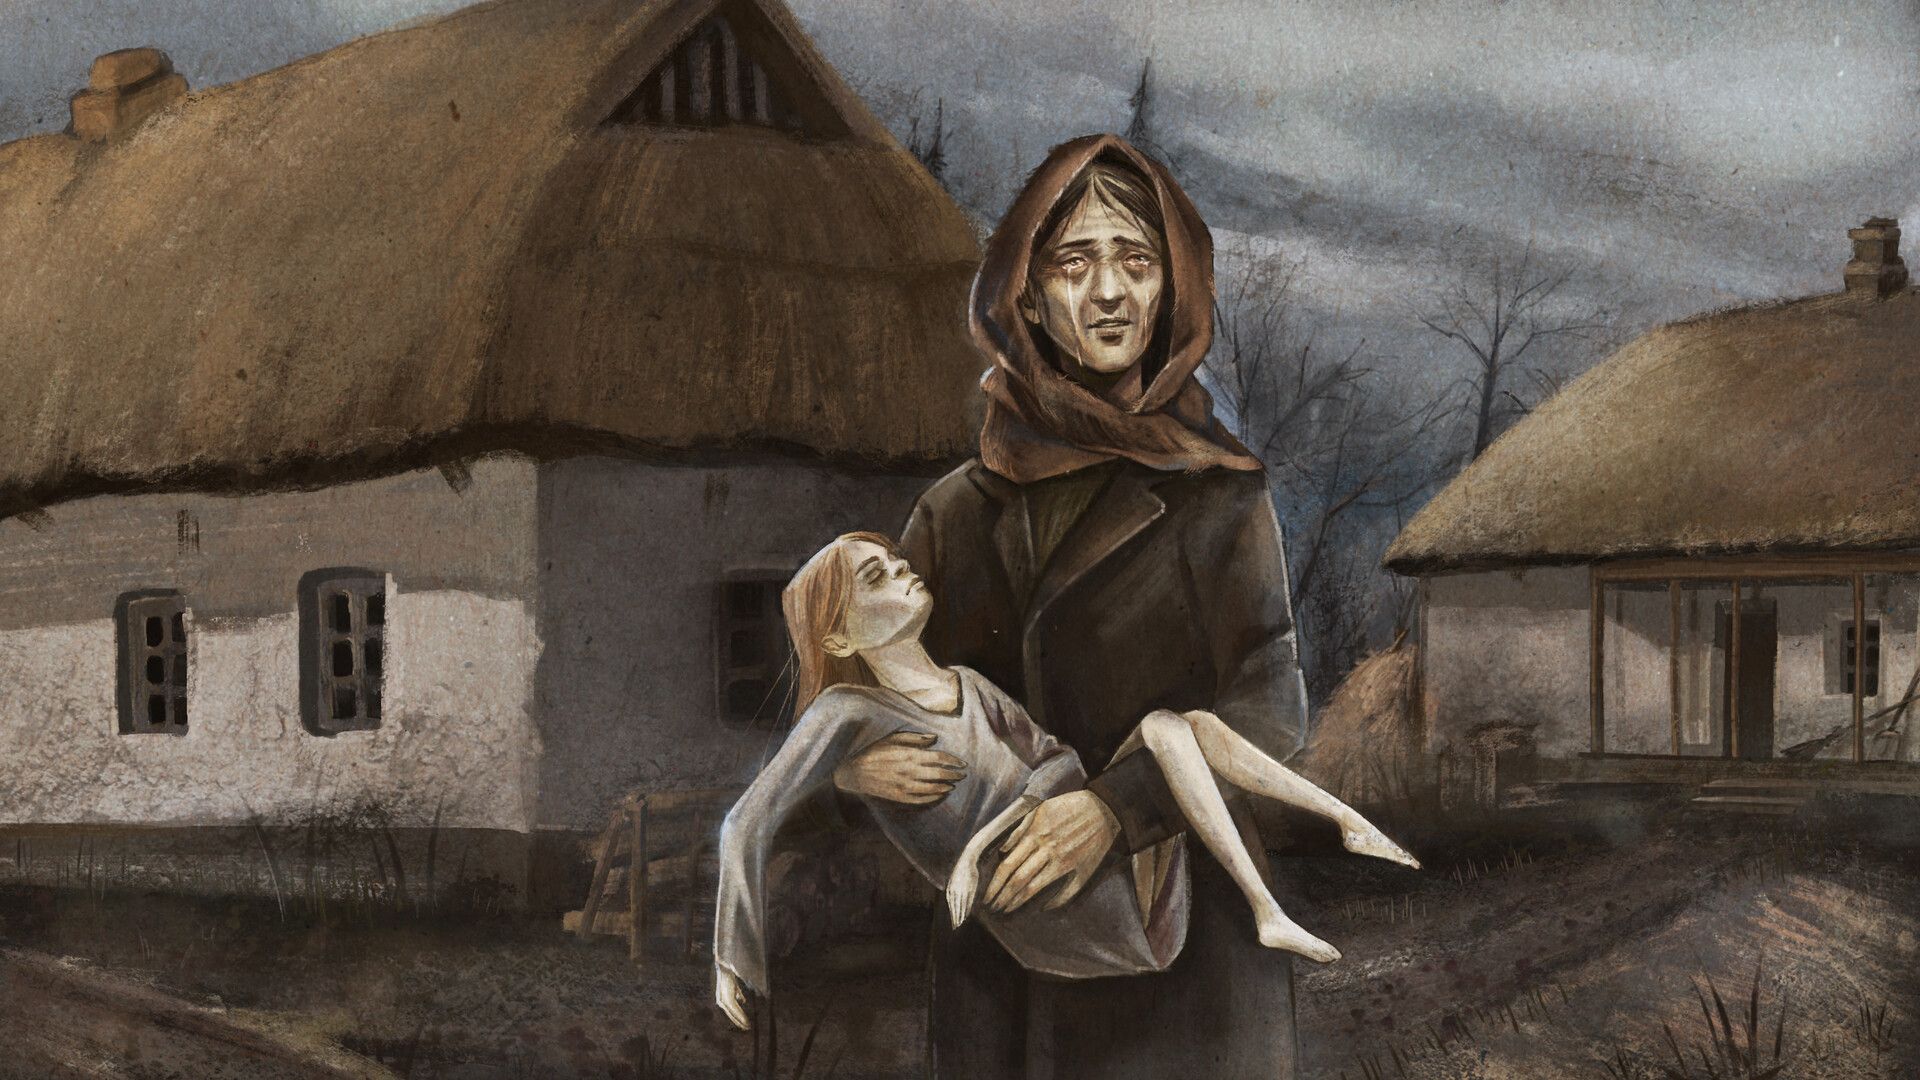 Famine Way - українська гра про Голодомор отримала перший трейлер